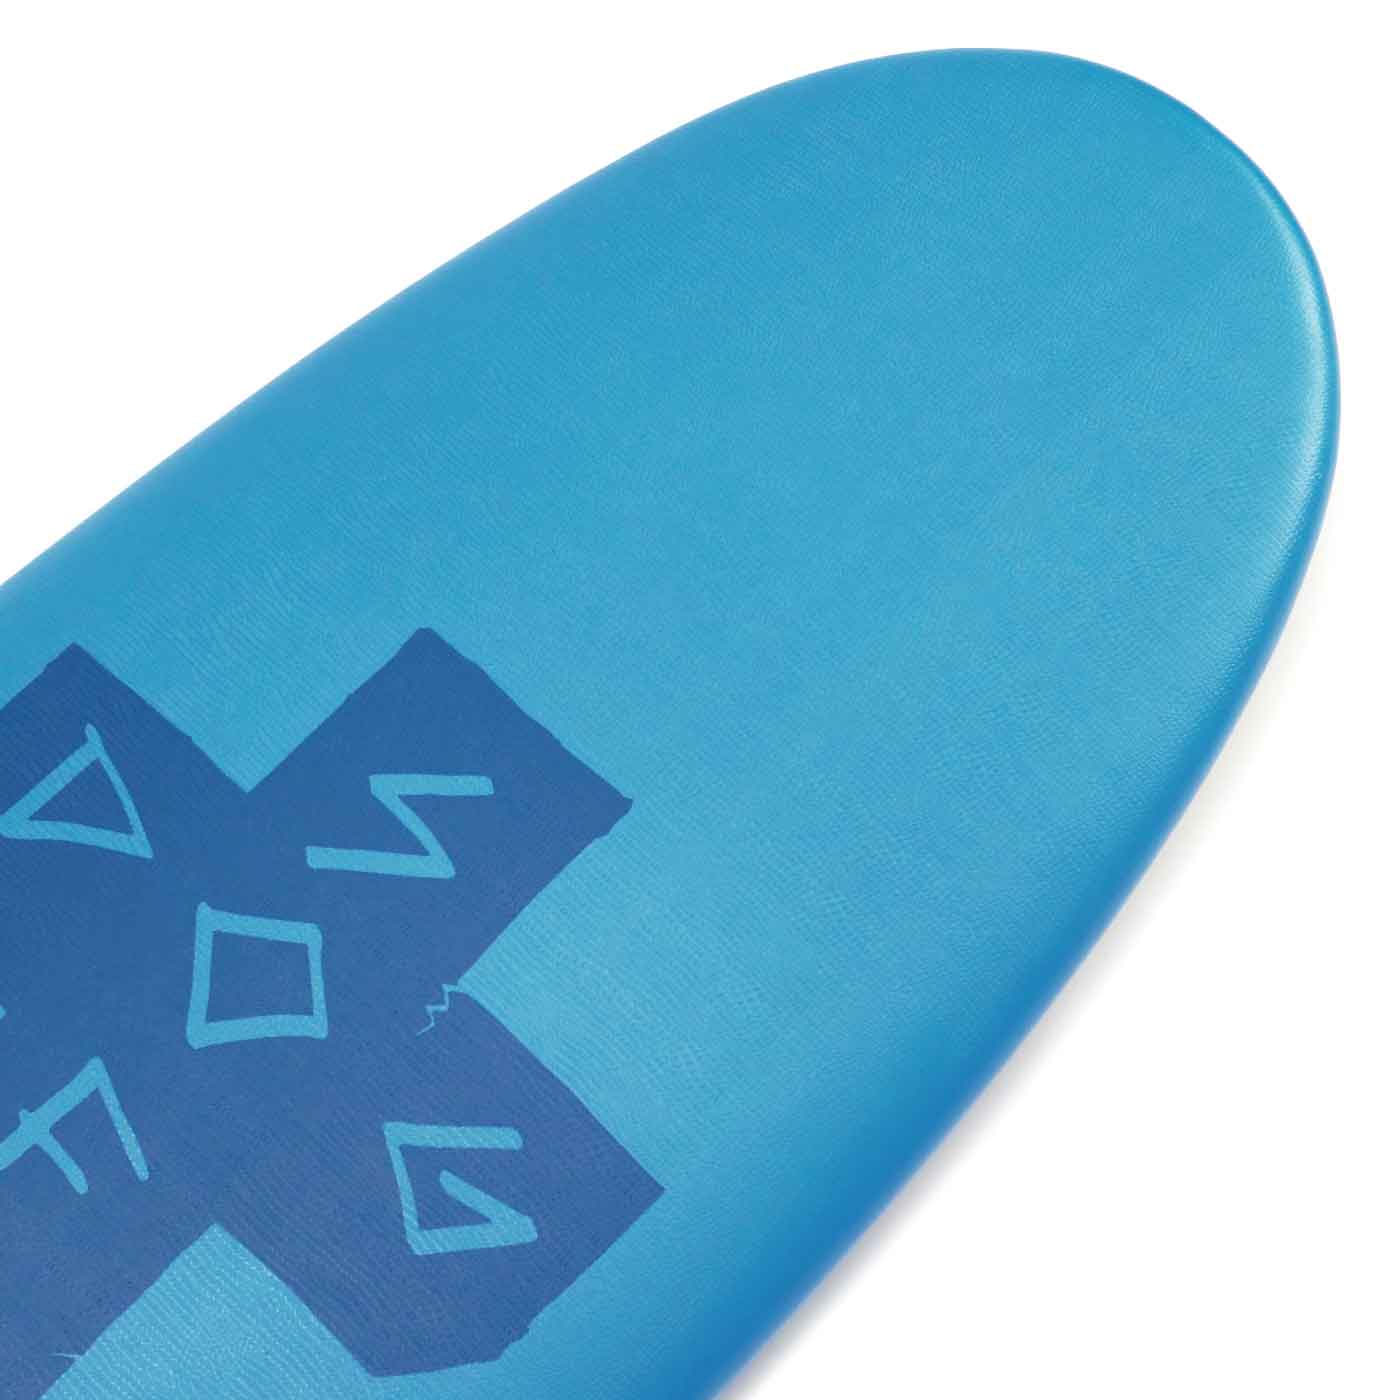 softdogsurf grate dane 6'2 soft top surf board nose